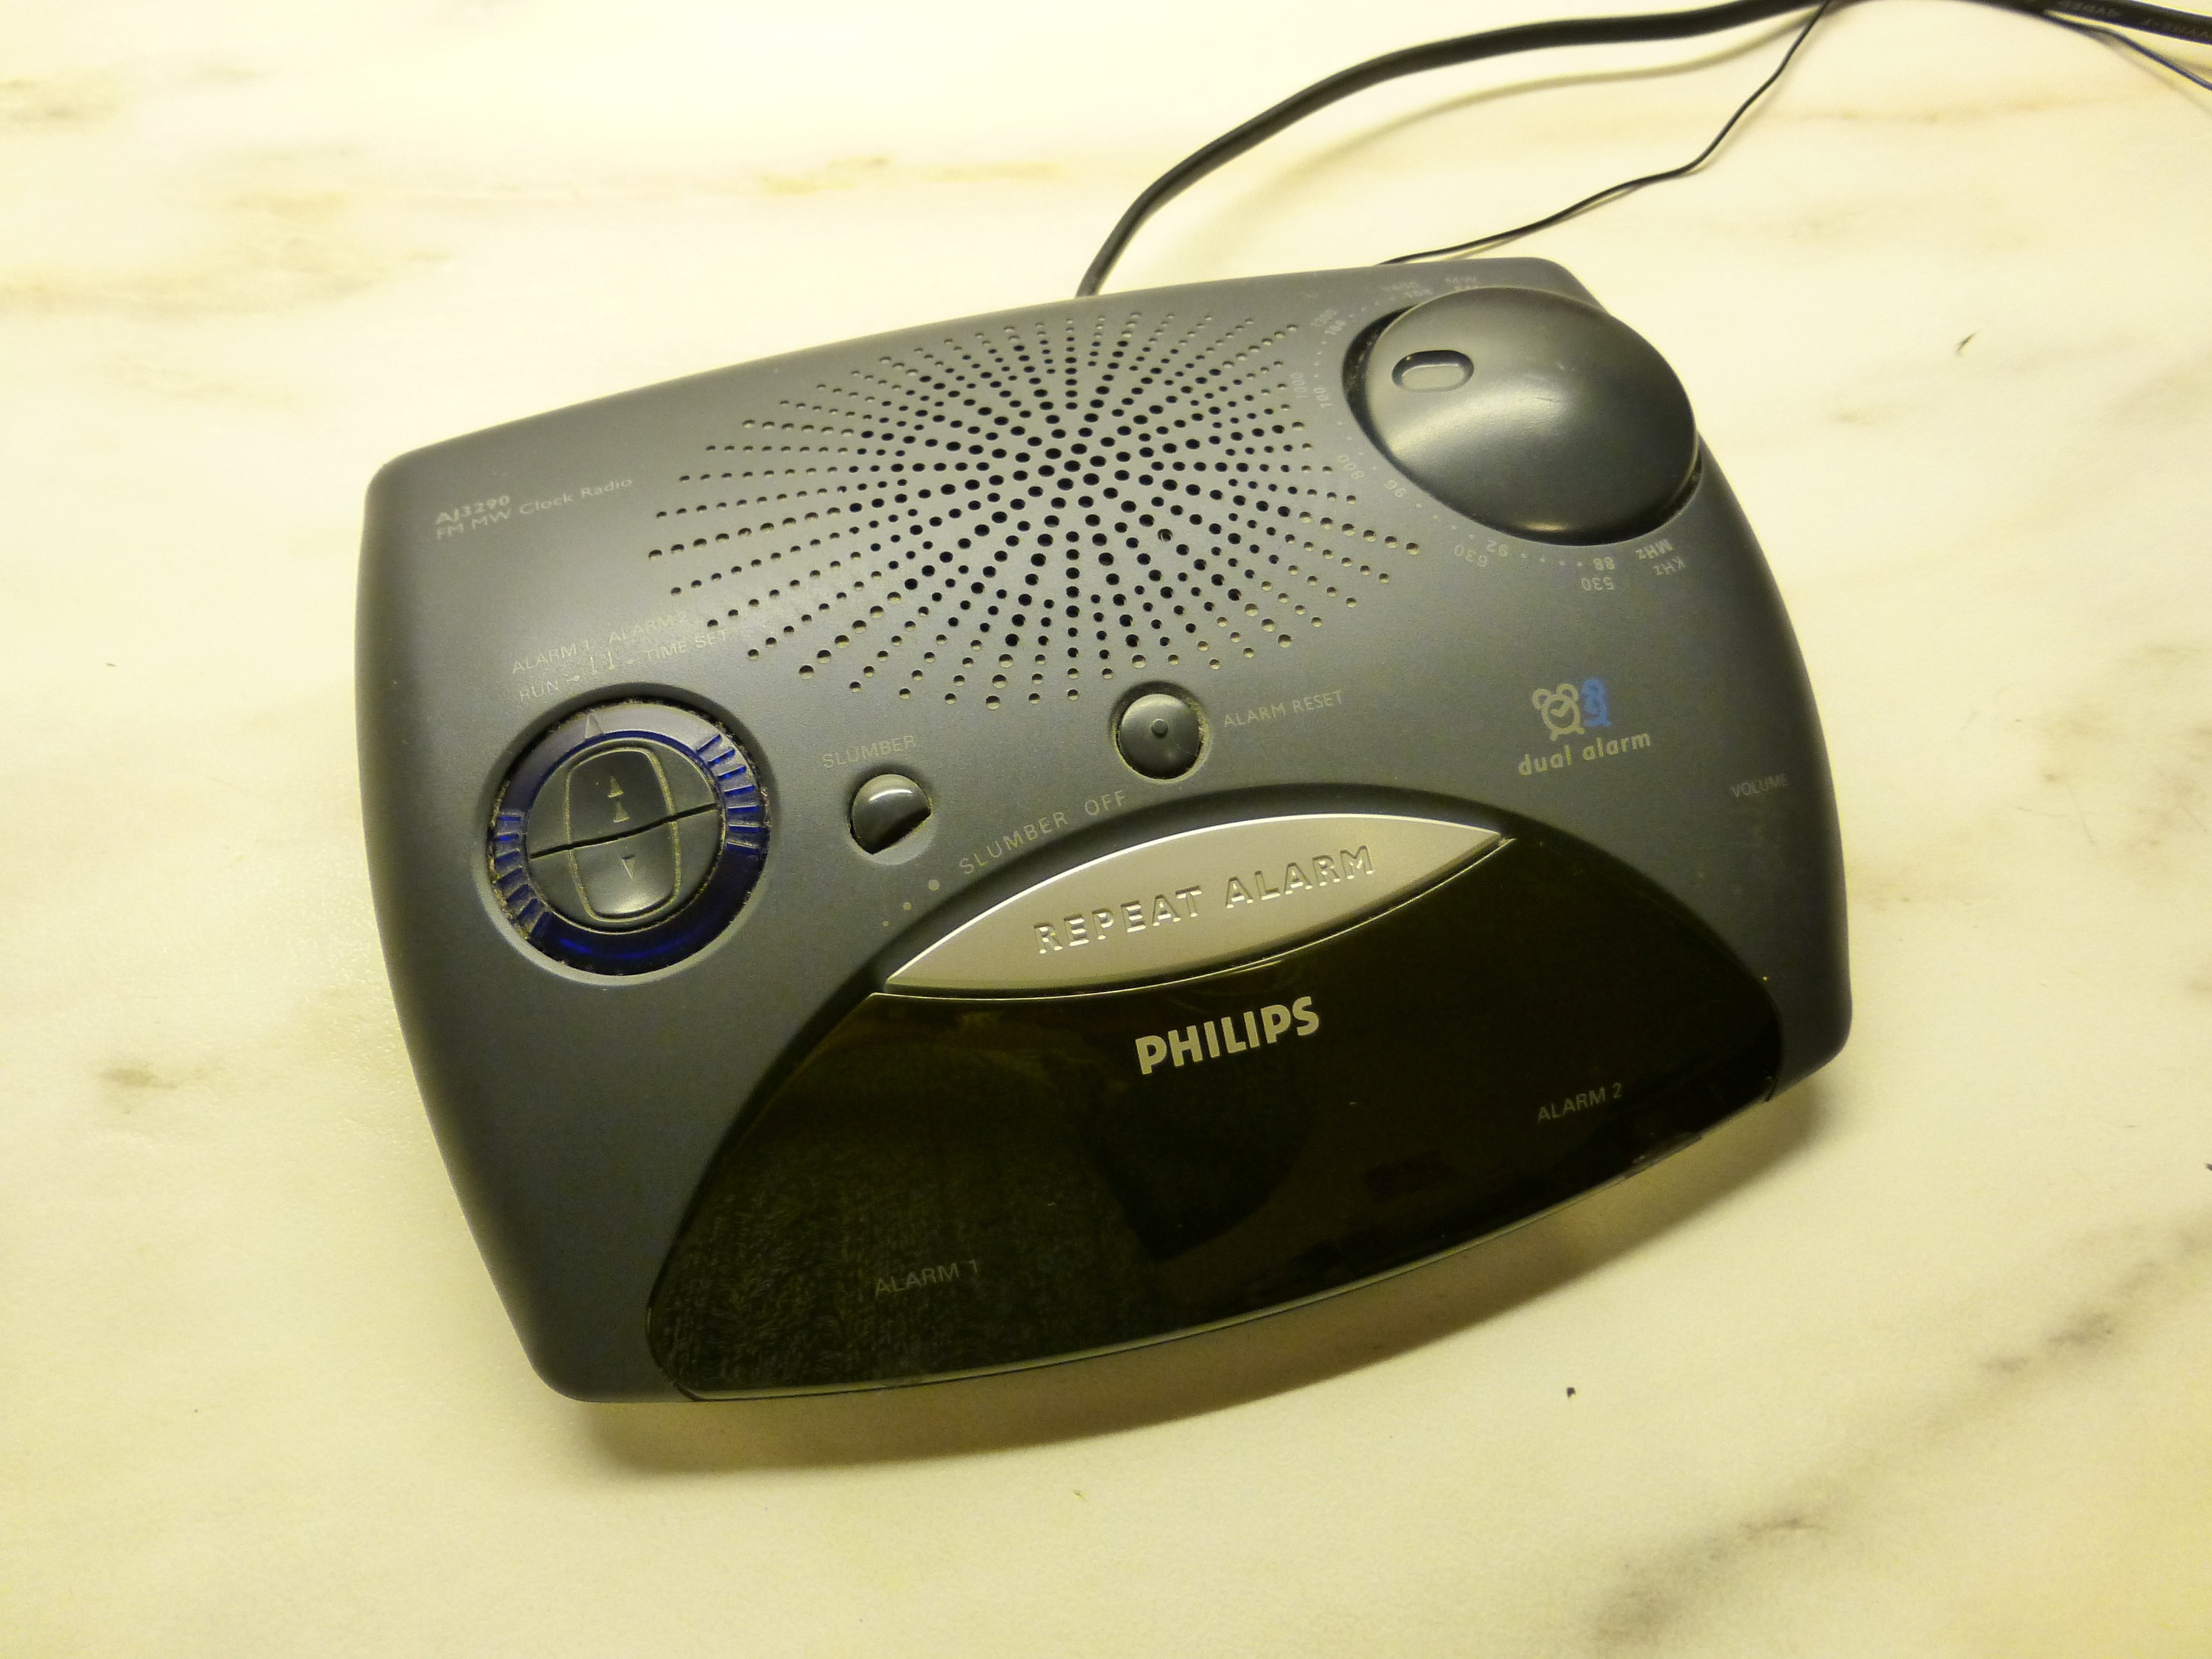 black Philips Repeat Alarm device